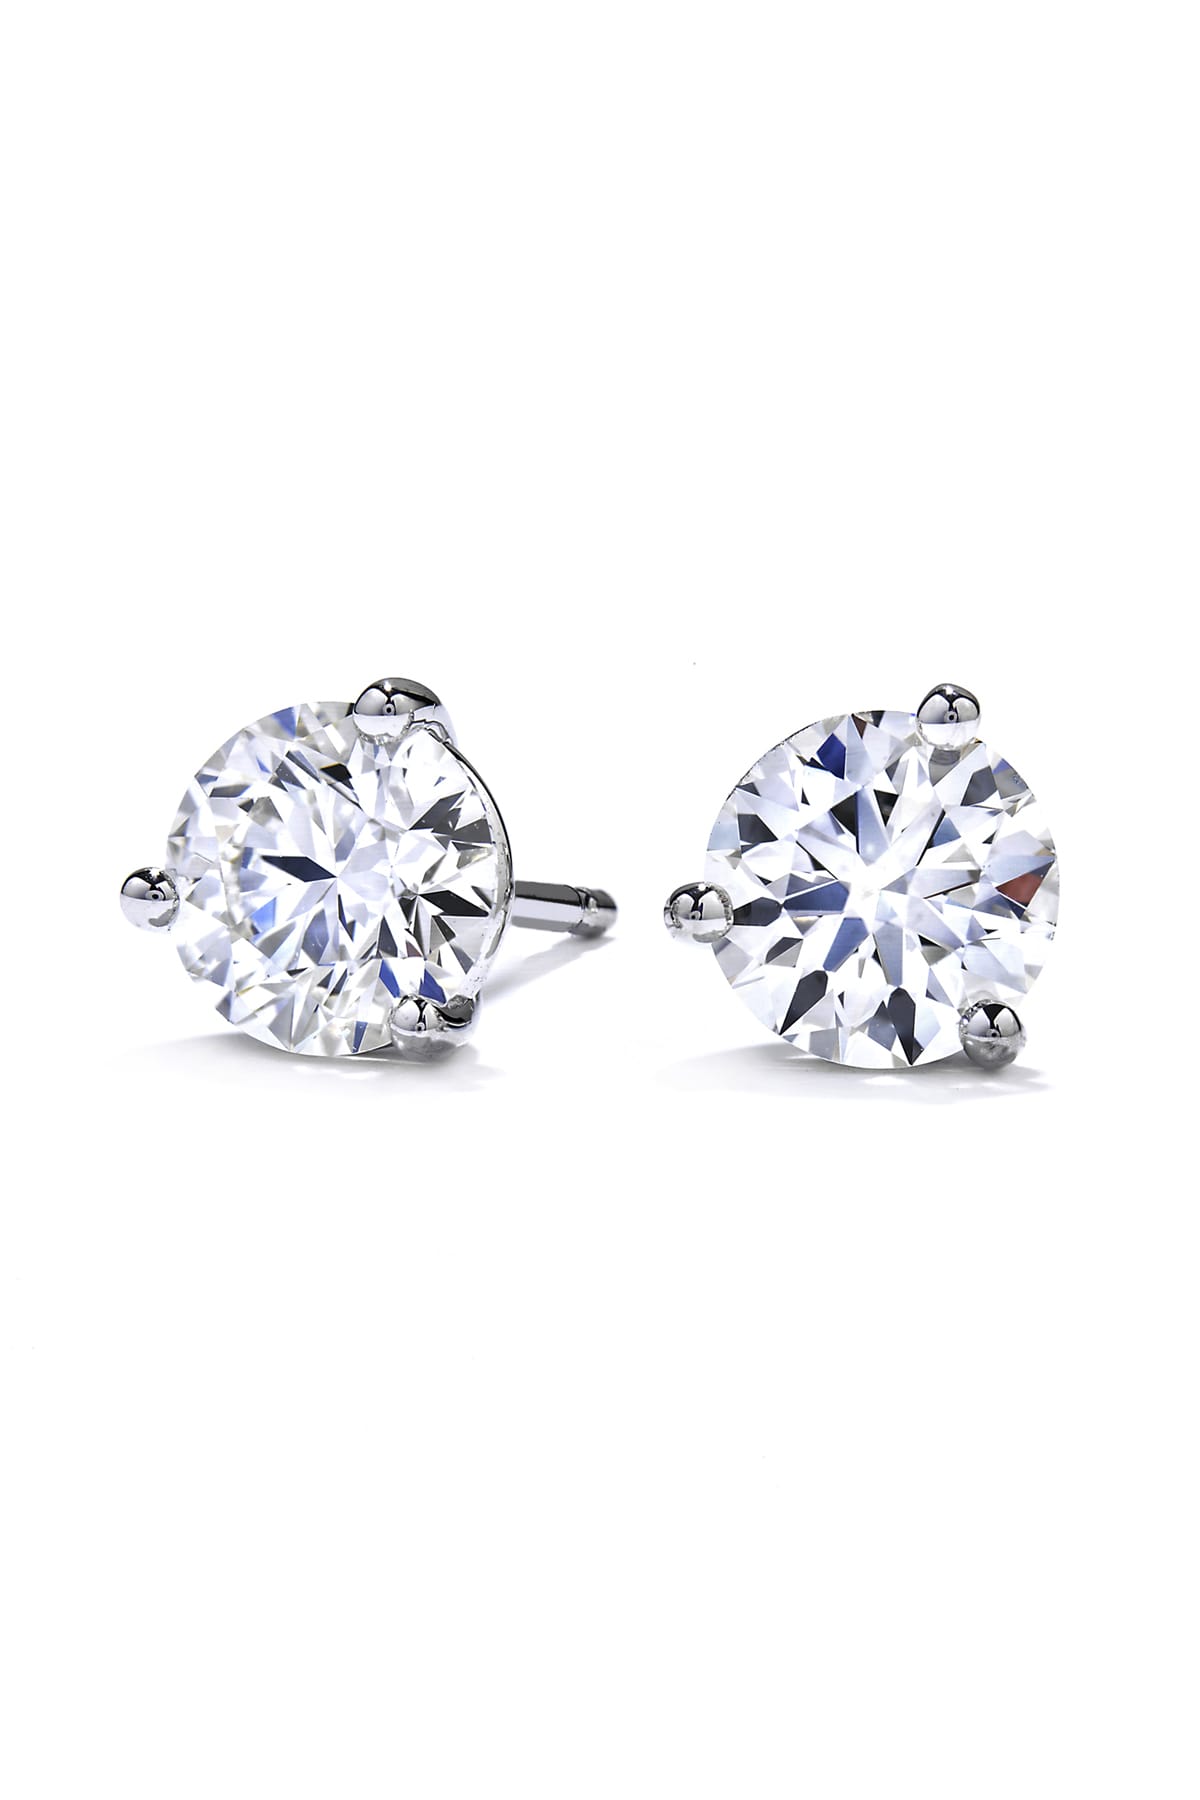 LeGassick Diamond Stud Earrings available at LeGassick Diamonds and Jewellery Gold Coast, Australia.